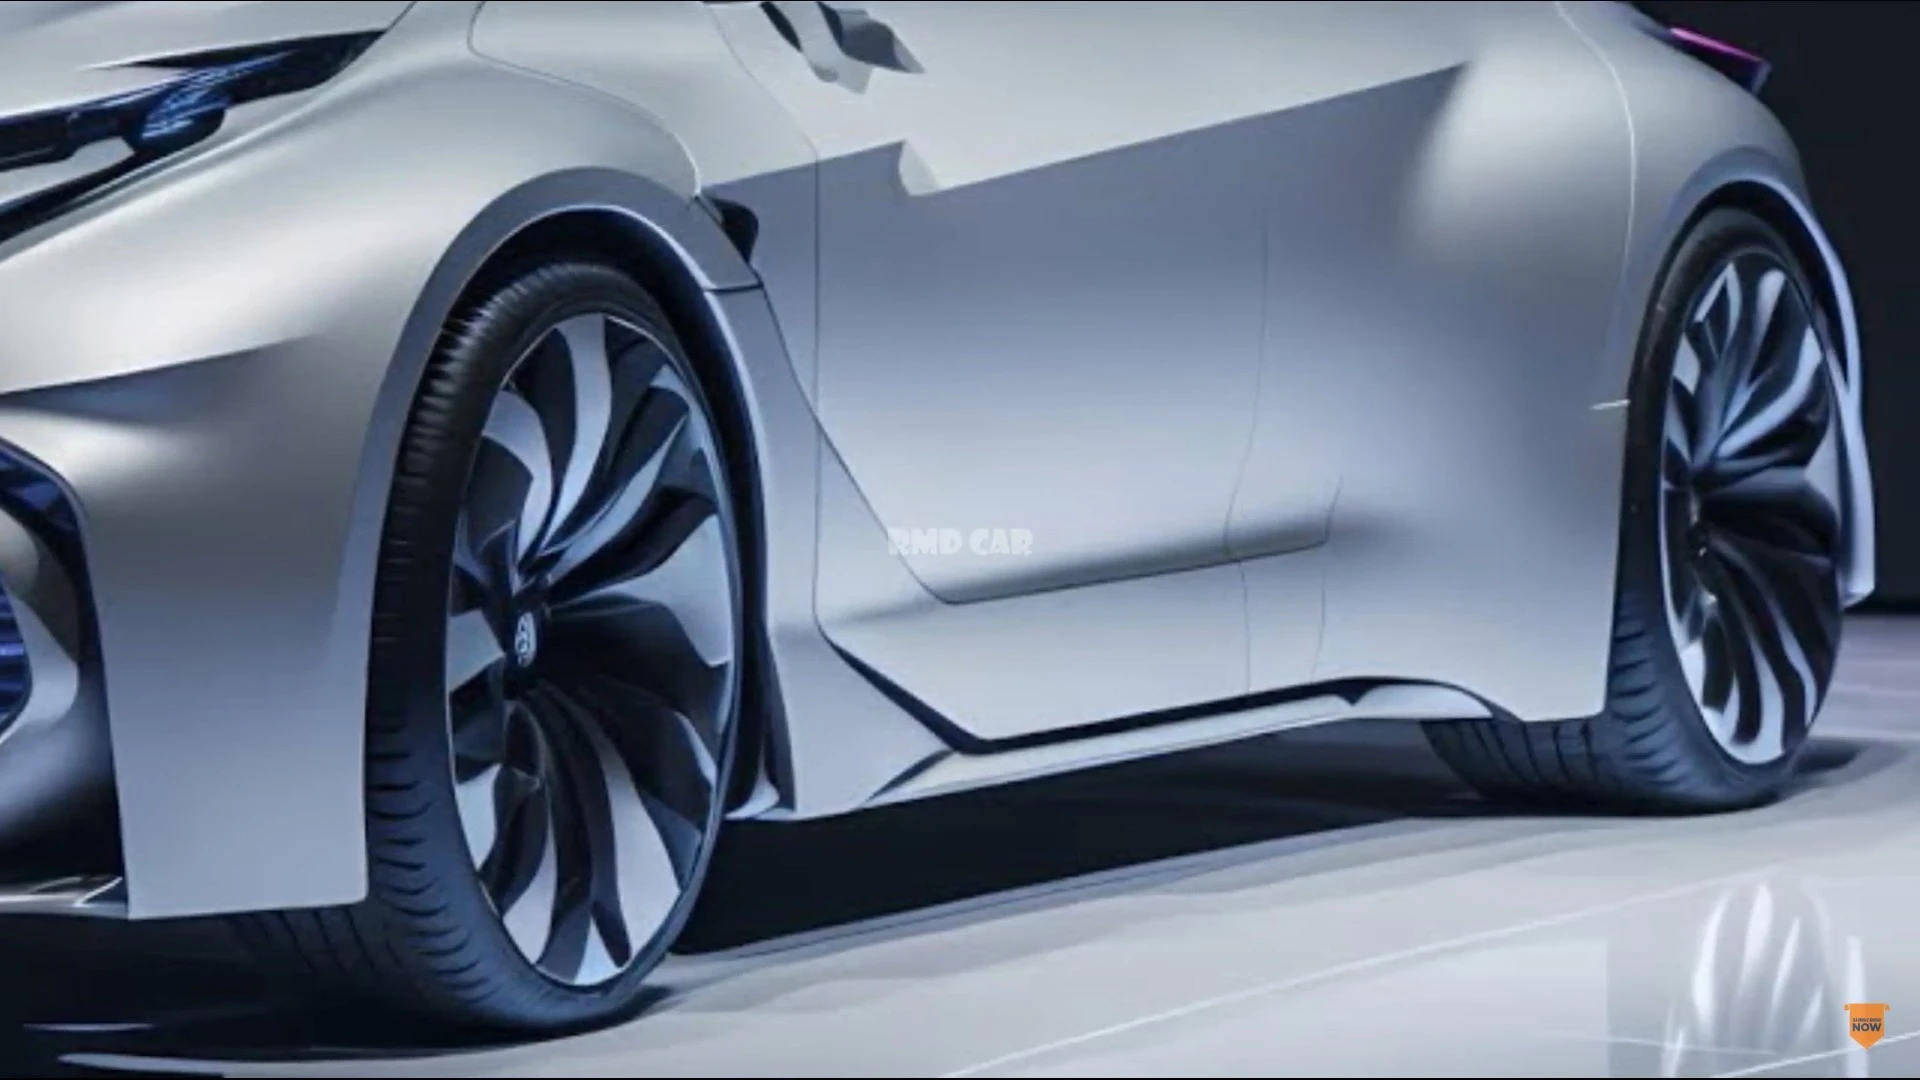 Corolla GR 2025 Concept / Foto projeção / RMD CAR / YouTube